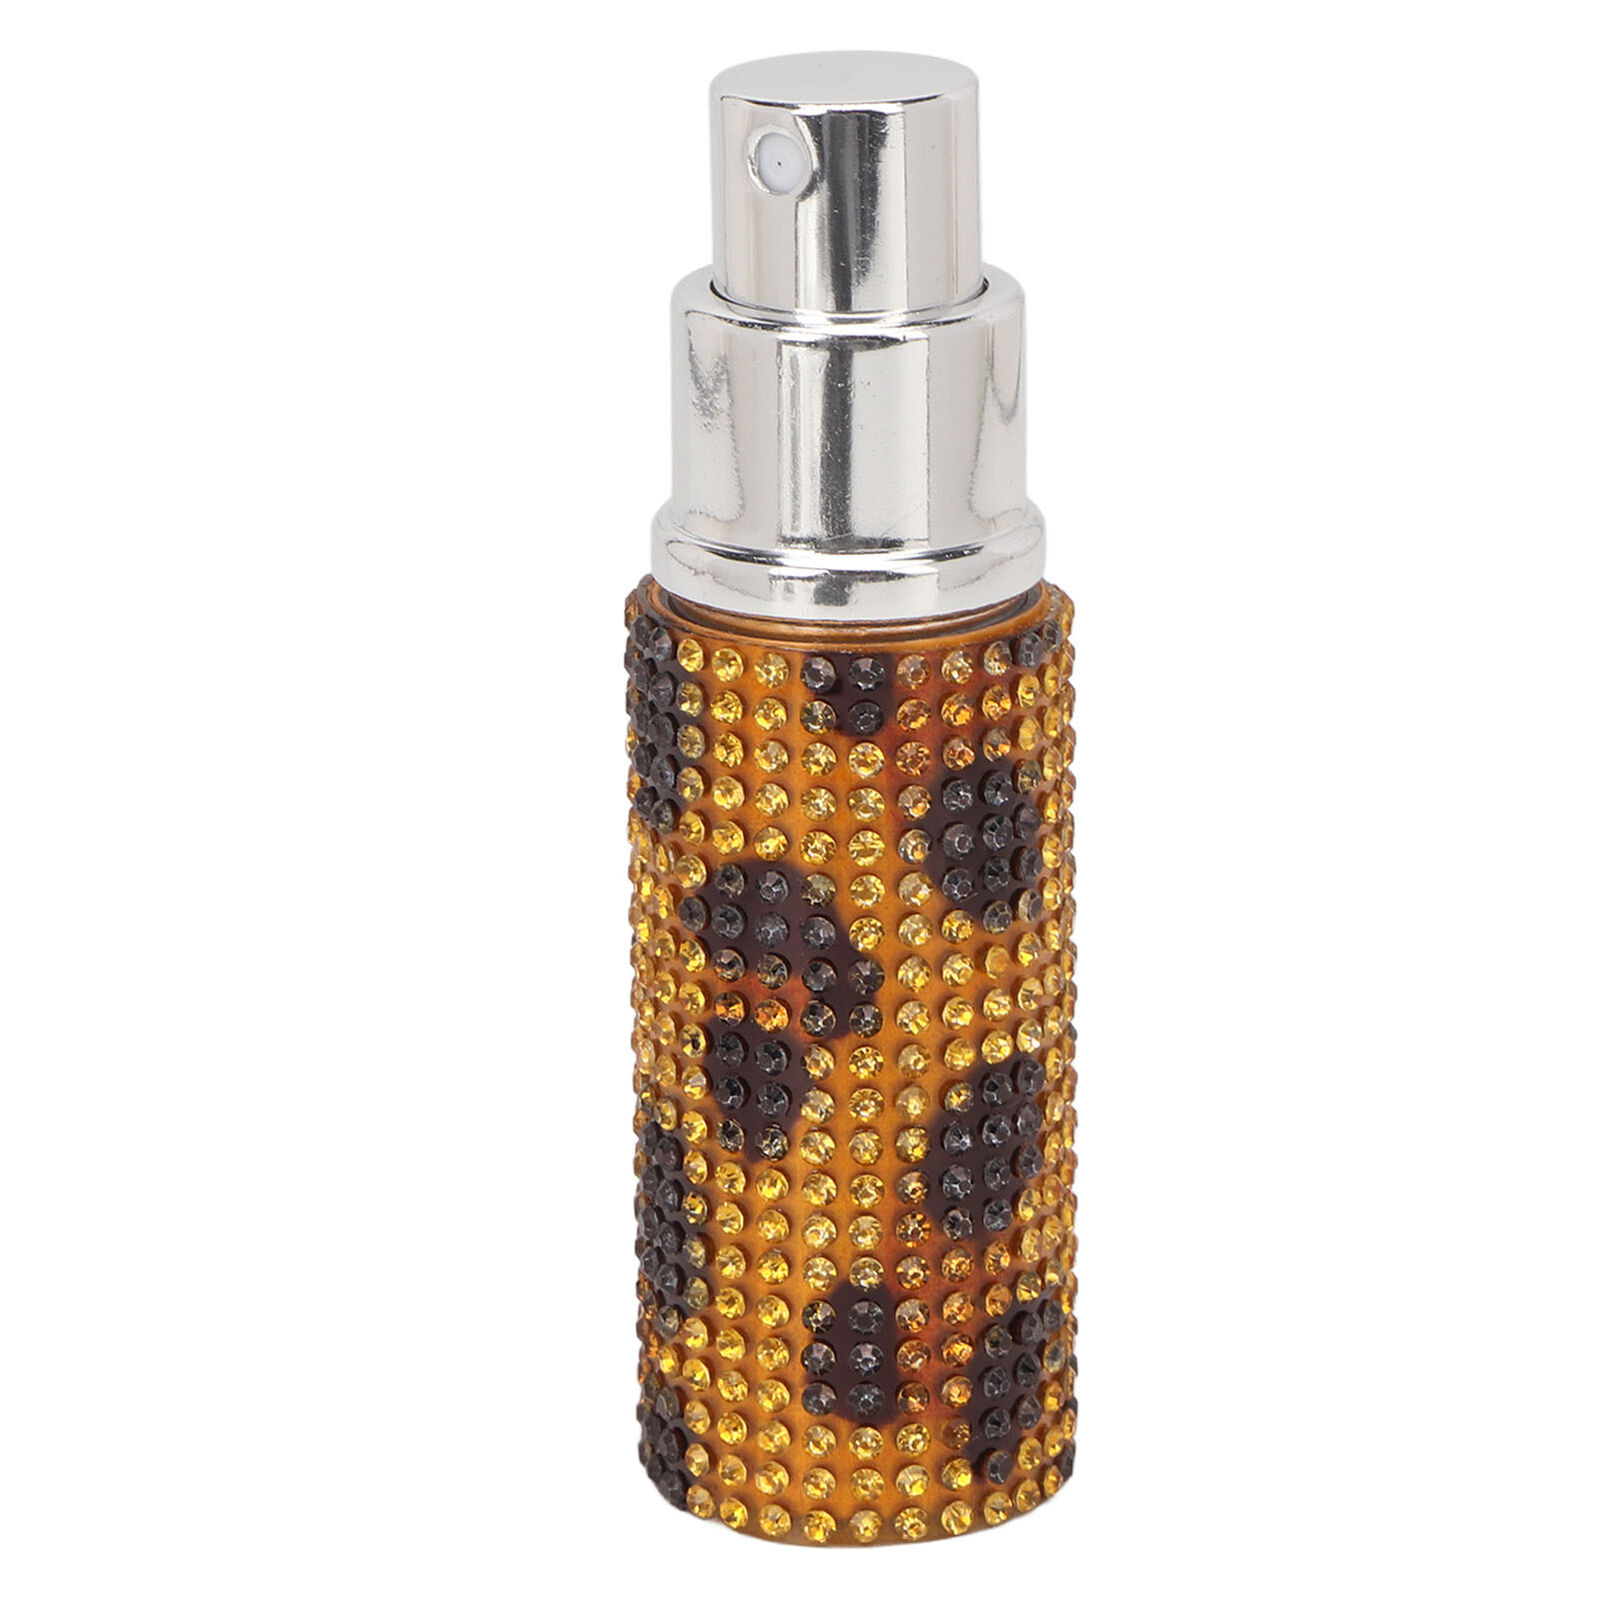 10ml Refillable Perfume Bottle - Rhinestone Decor Leopard Print Empty Spray